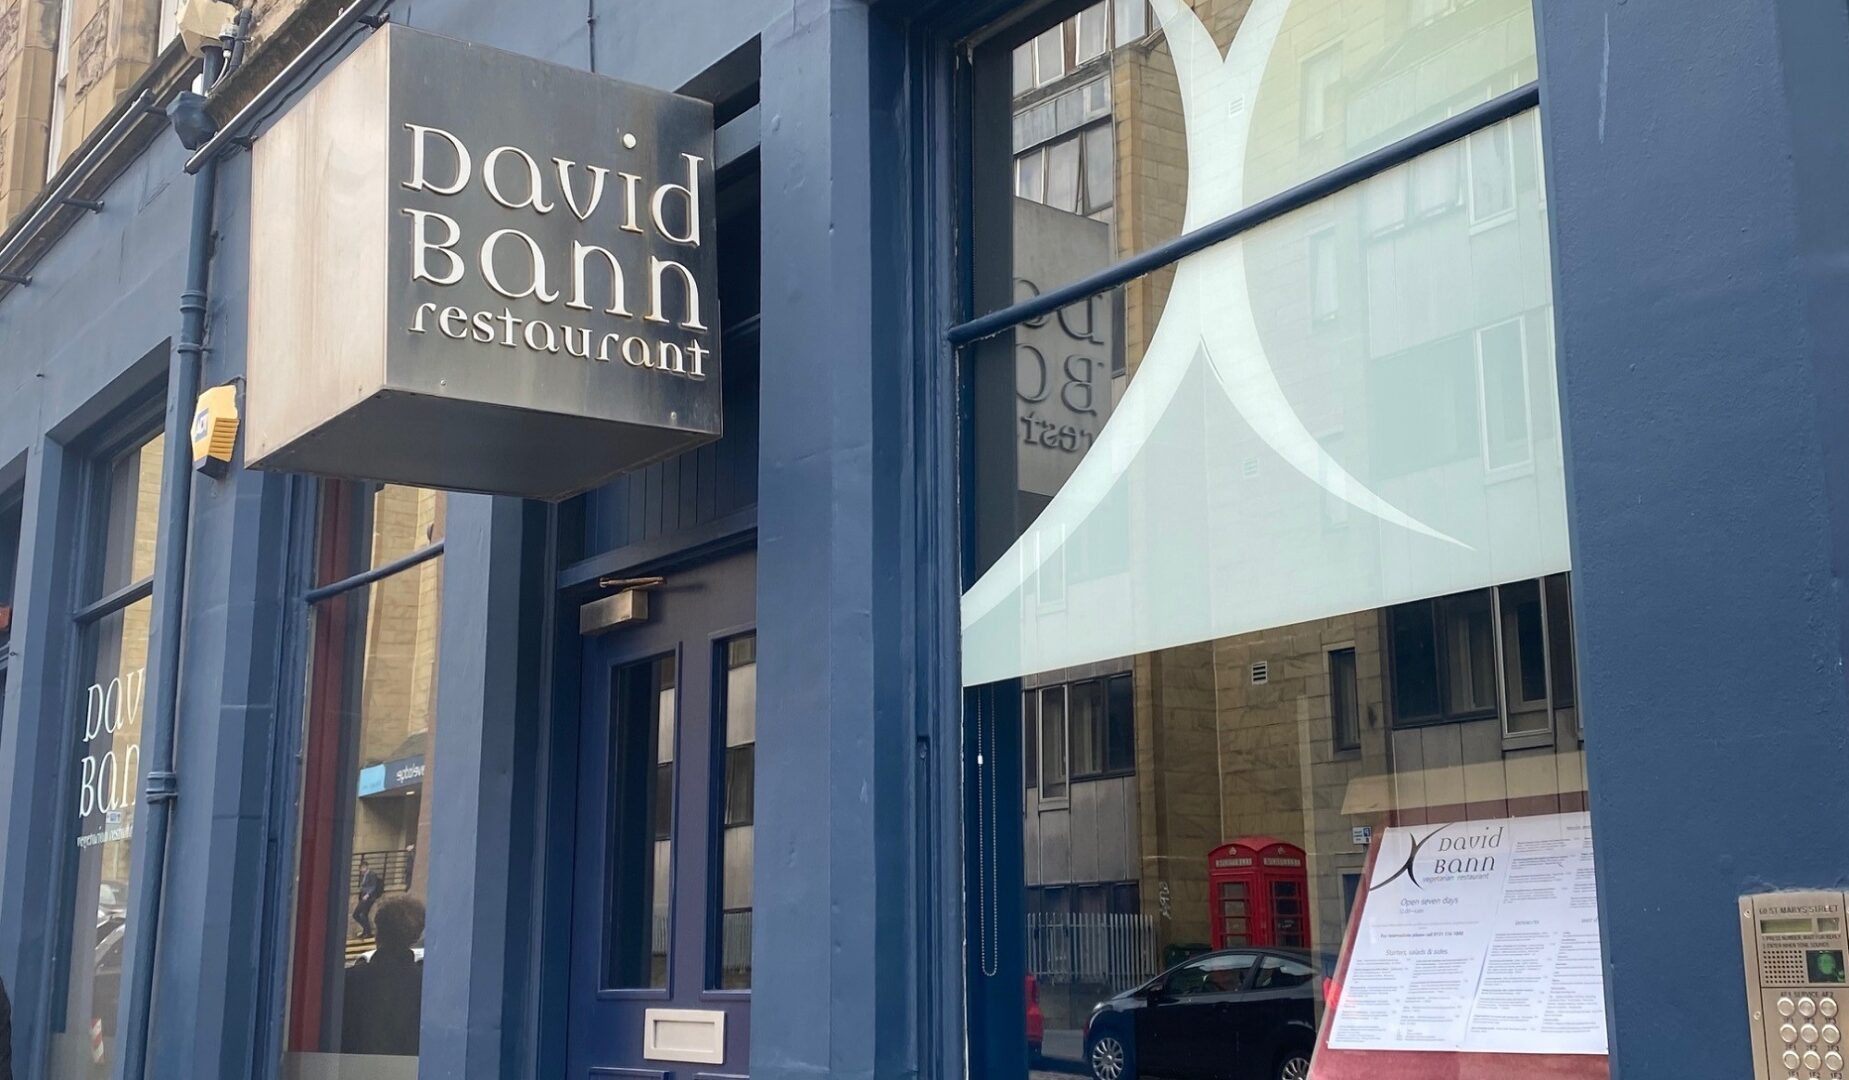 David Bann, menu in window